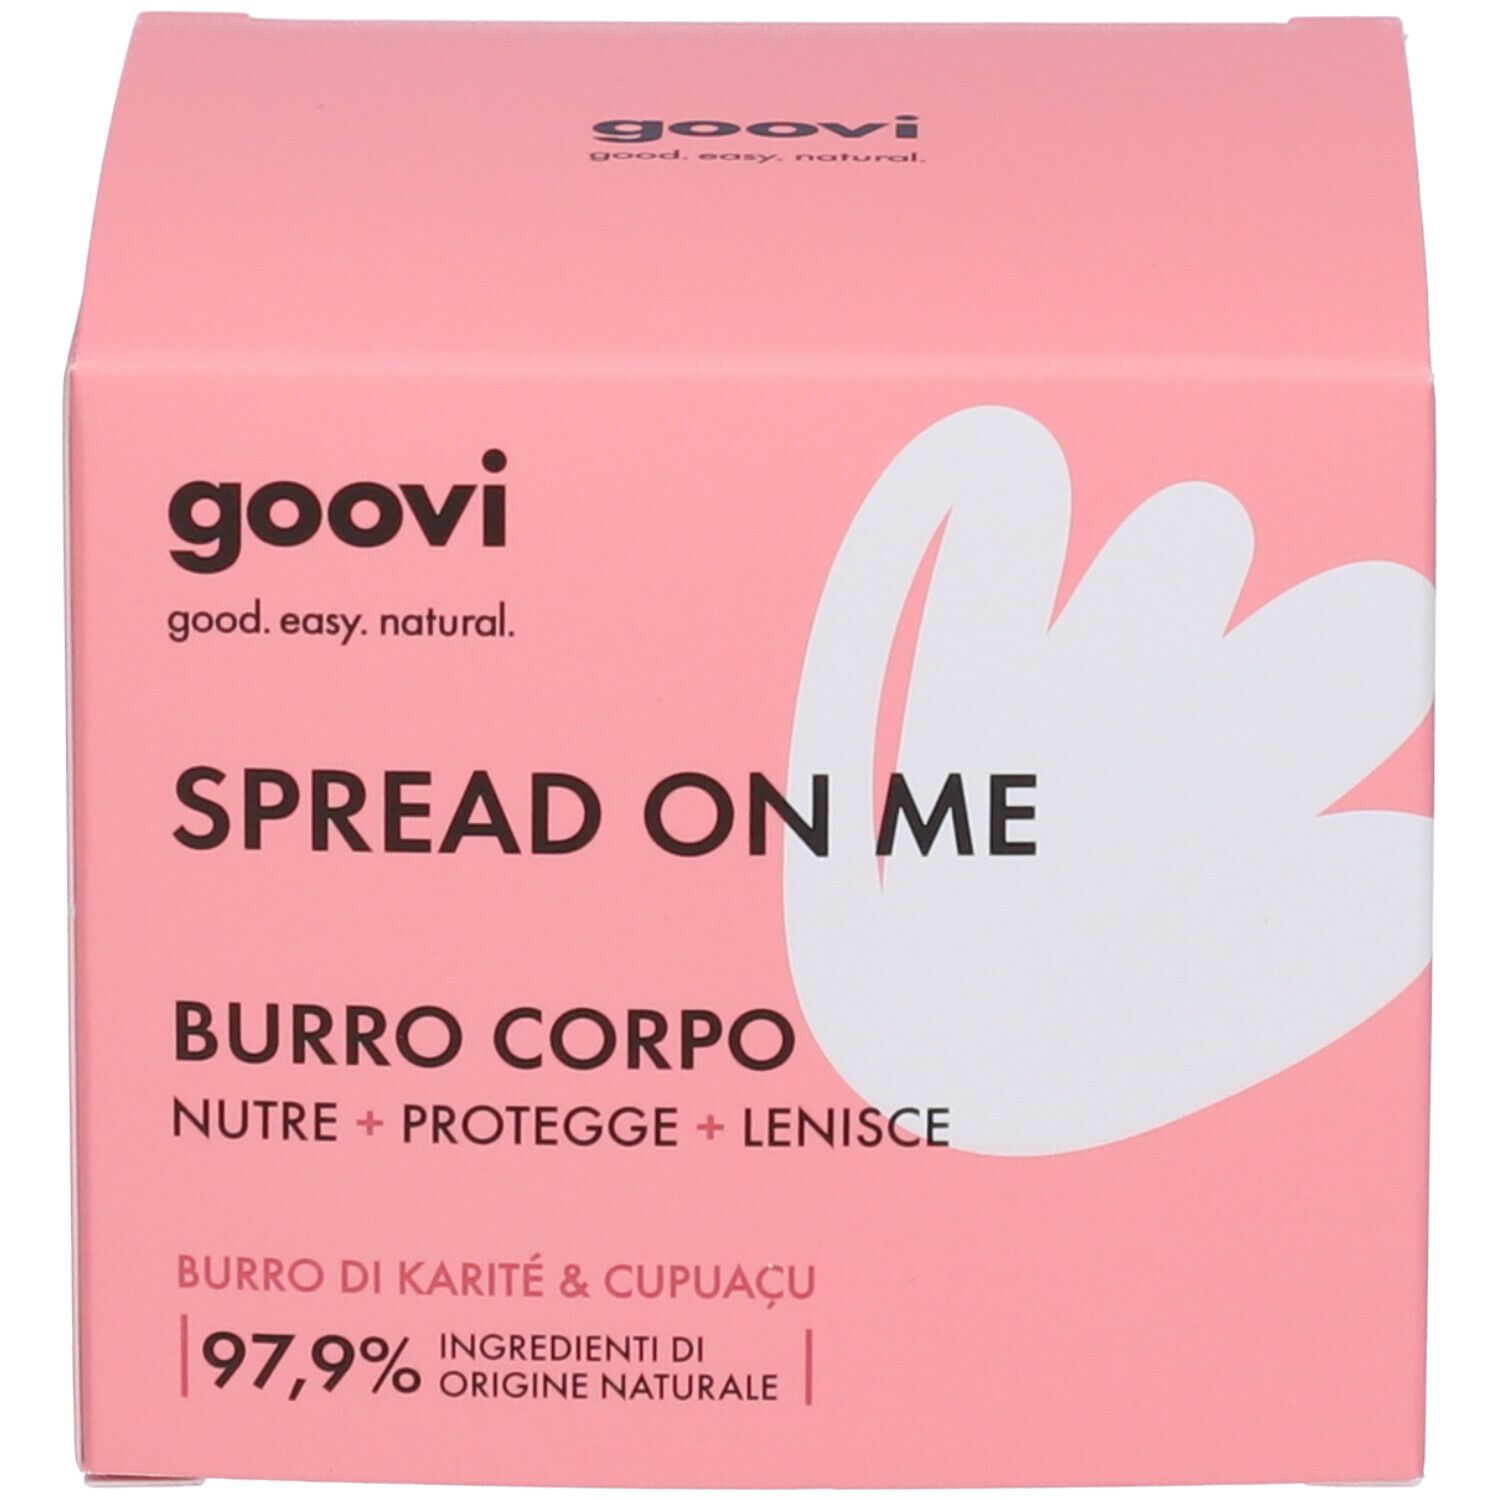 the good vibes company srl goovi burro corpo - spread on me